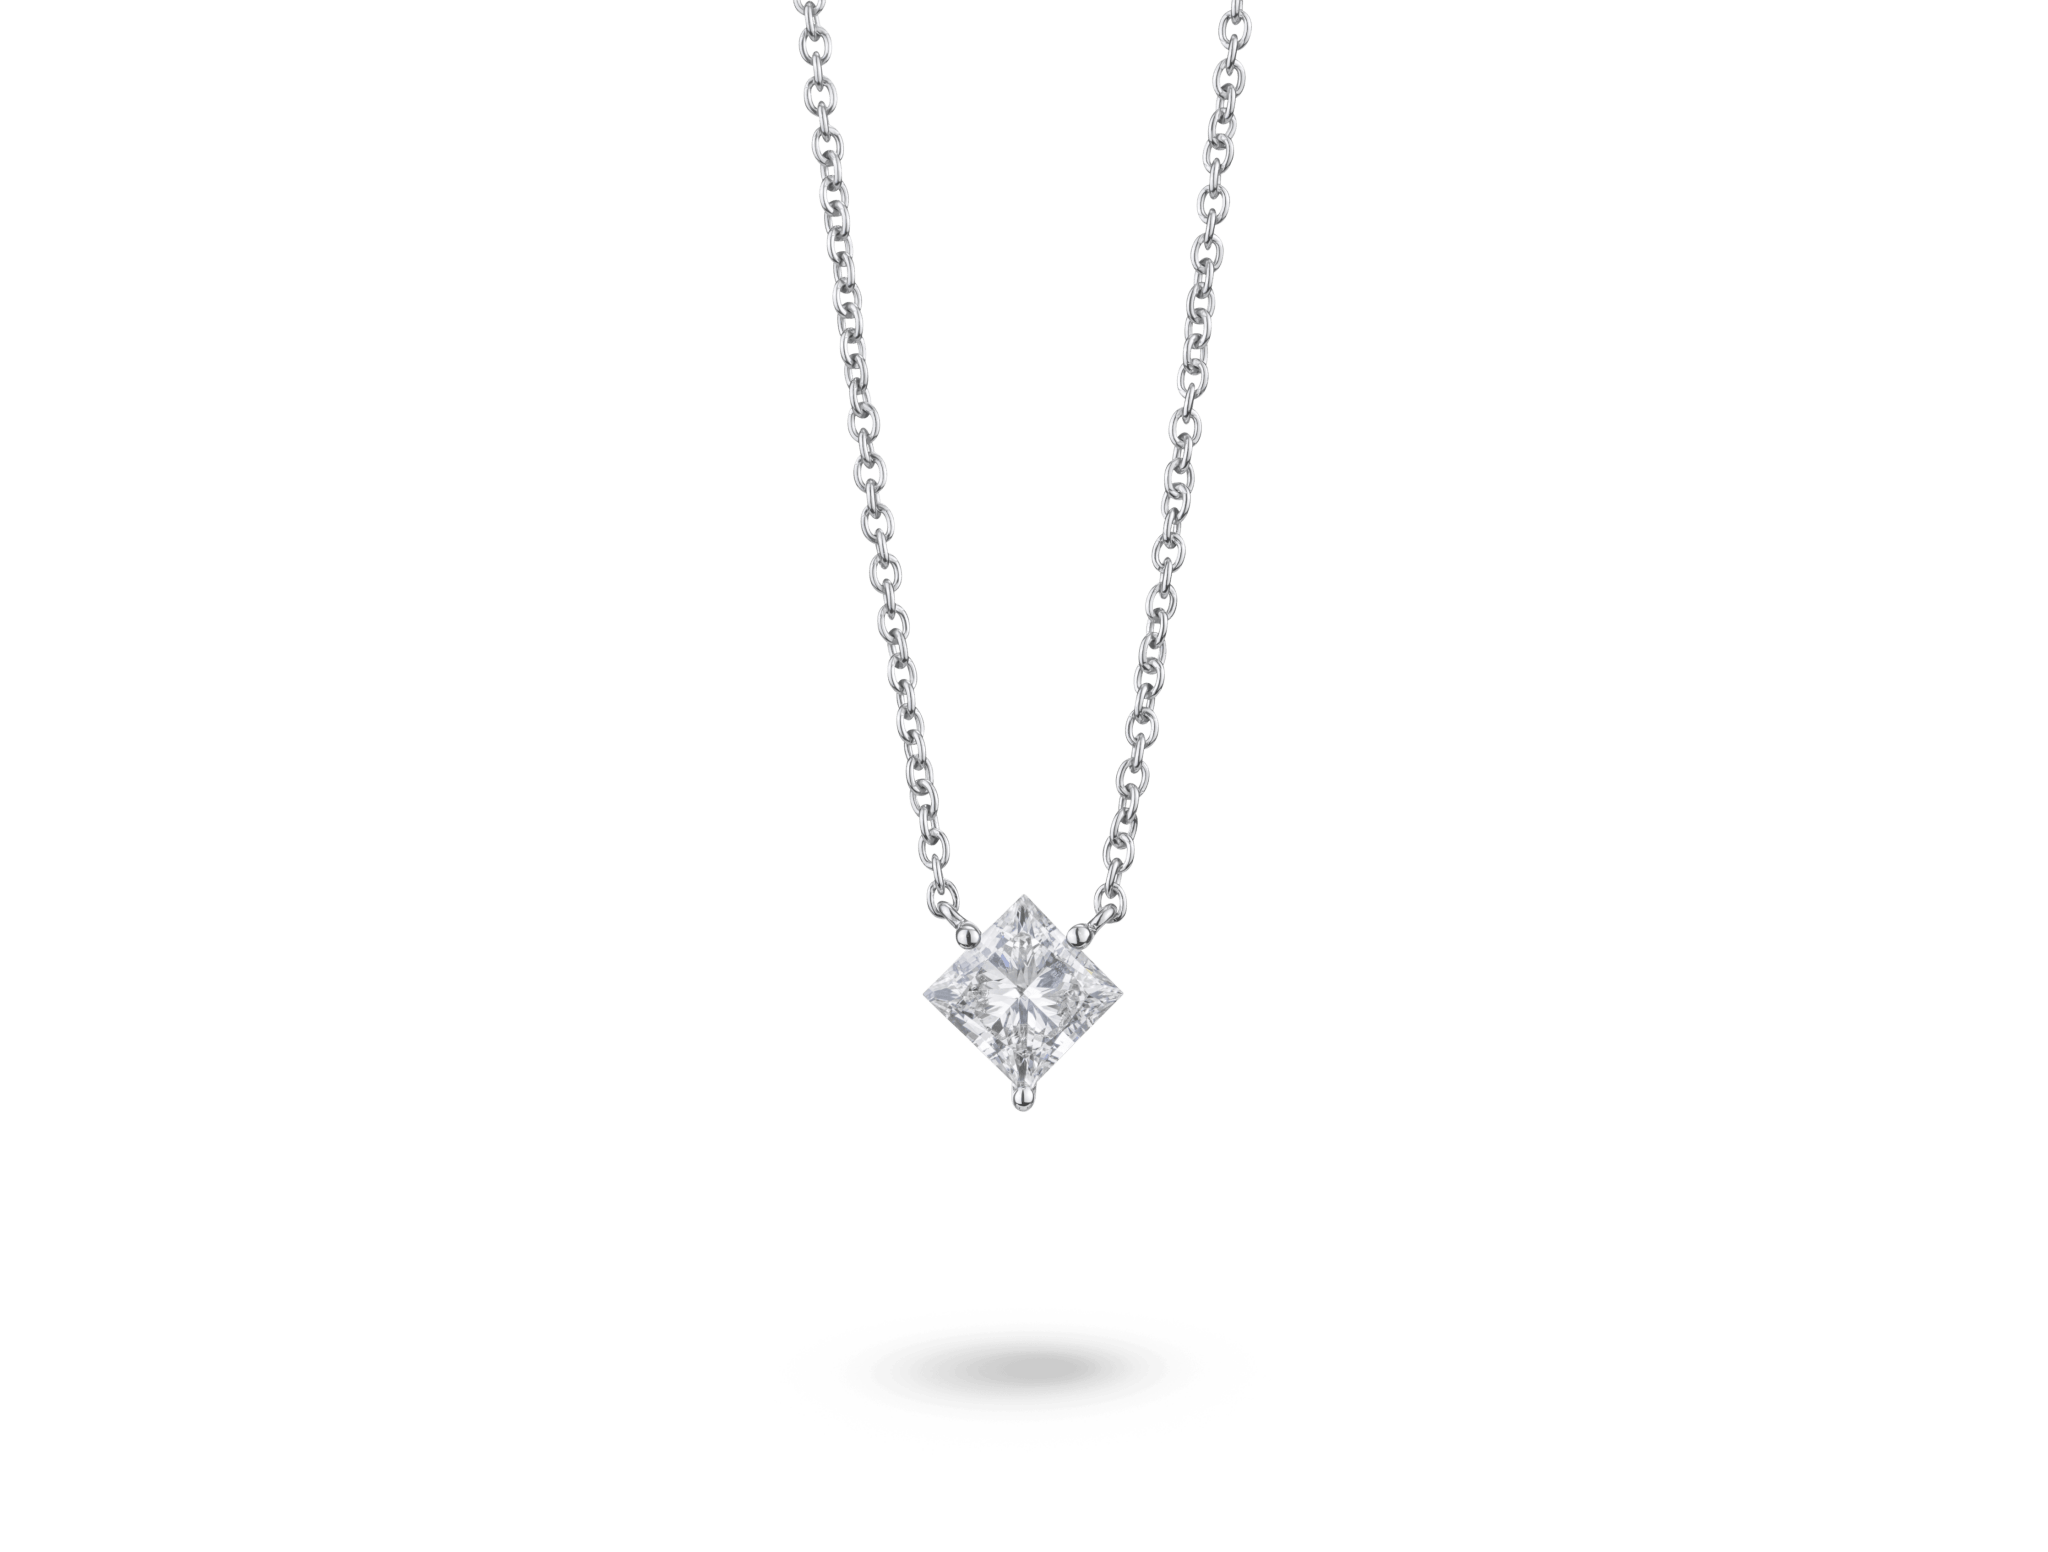 Lab-Grown Diamond 1ct. Princess Cut 14k Gold Pendant | White - #Lightbox Jewelry#